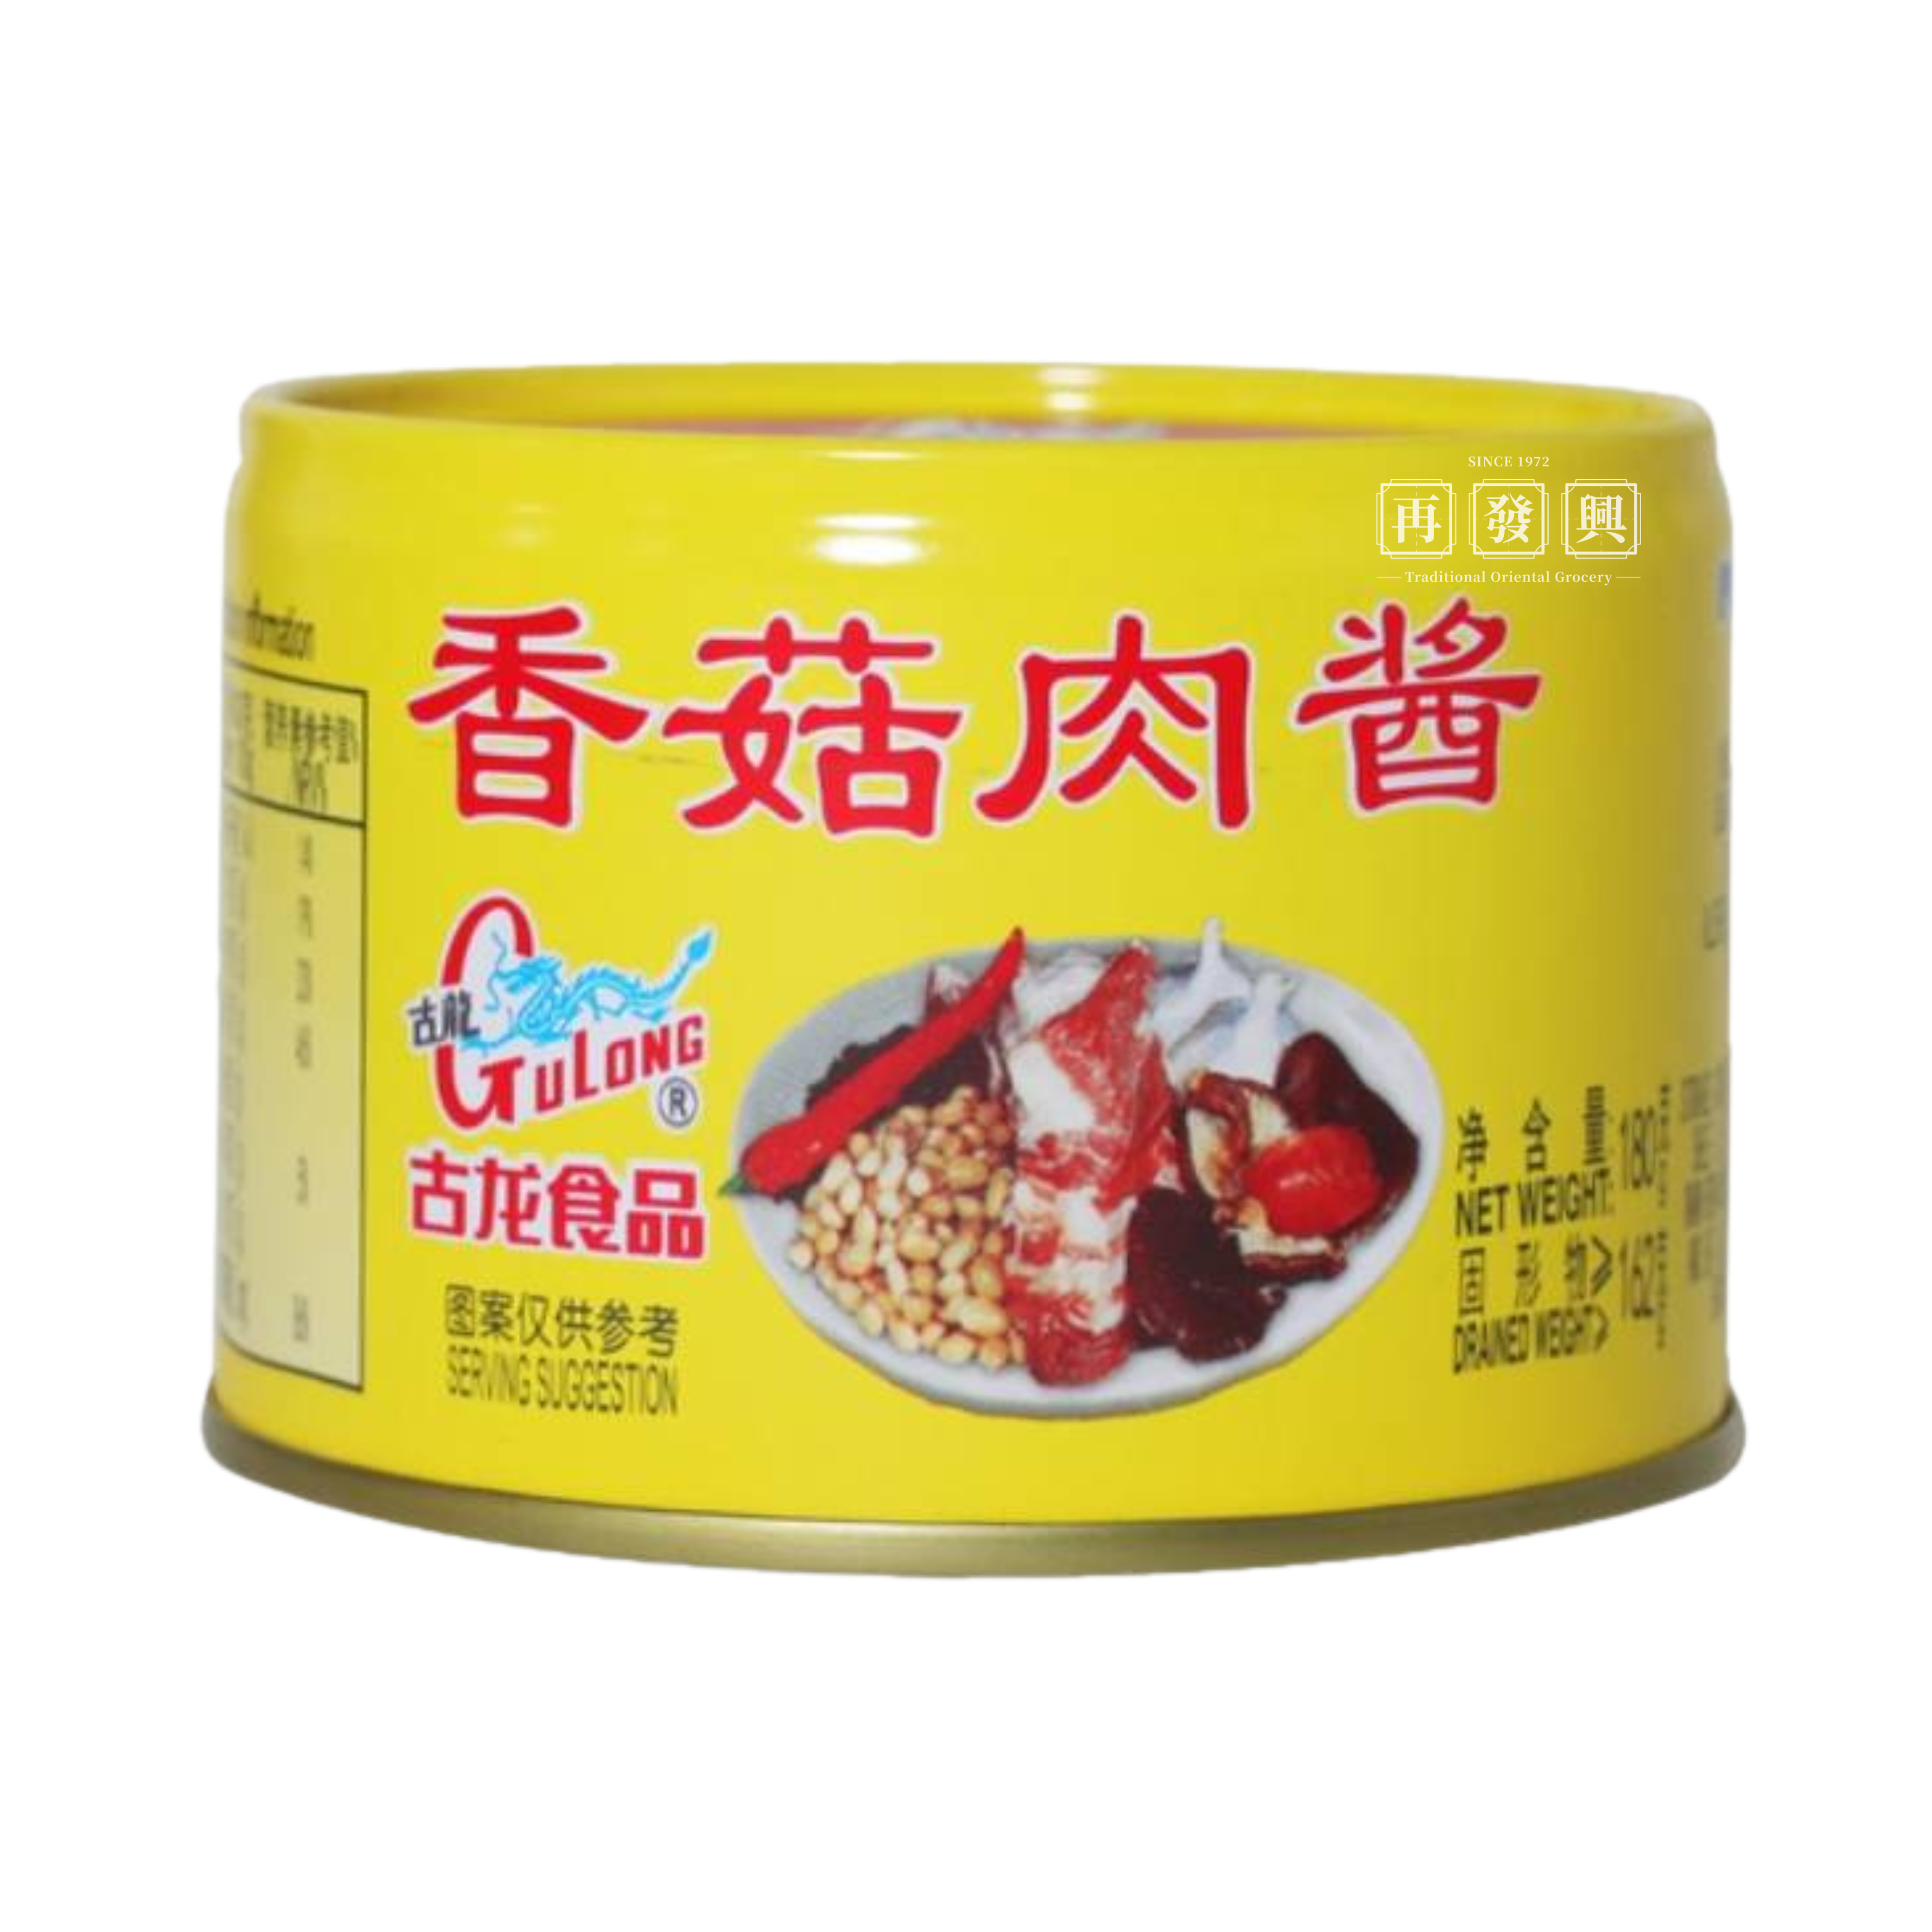 GuLong Pork Mince With Bean Paste 古龙香菇肉酱 180g